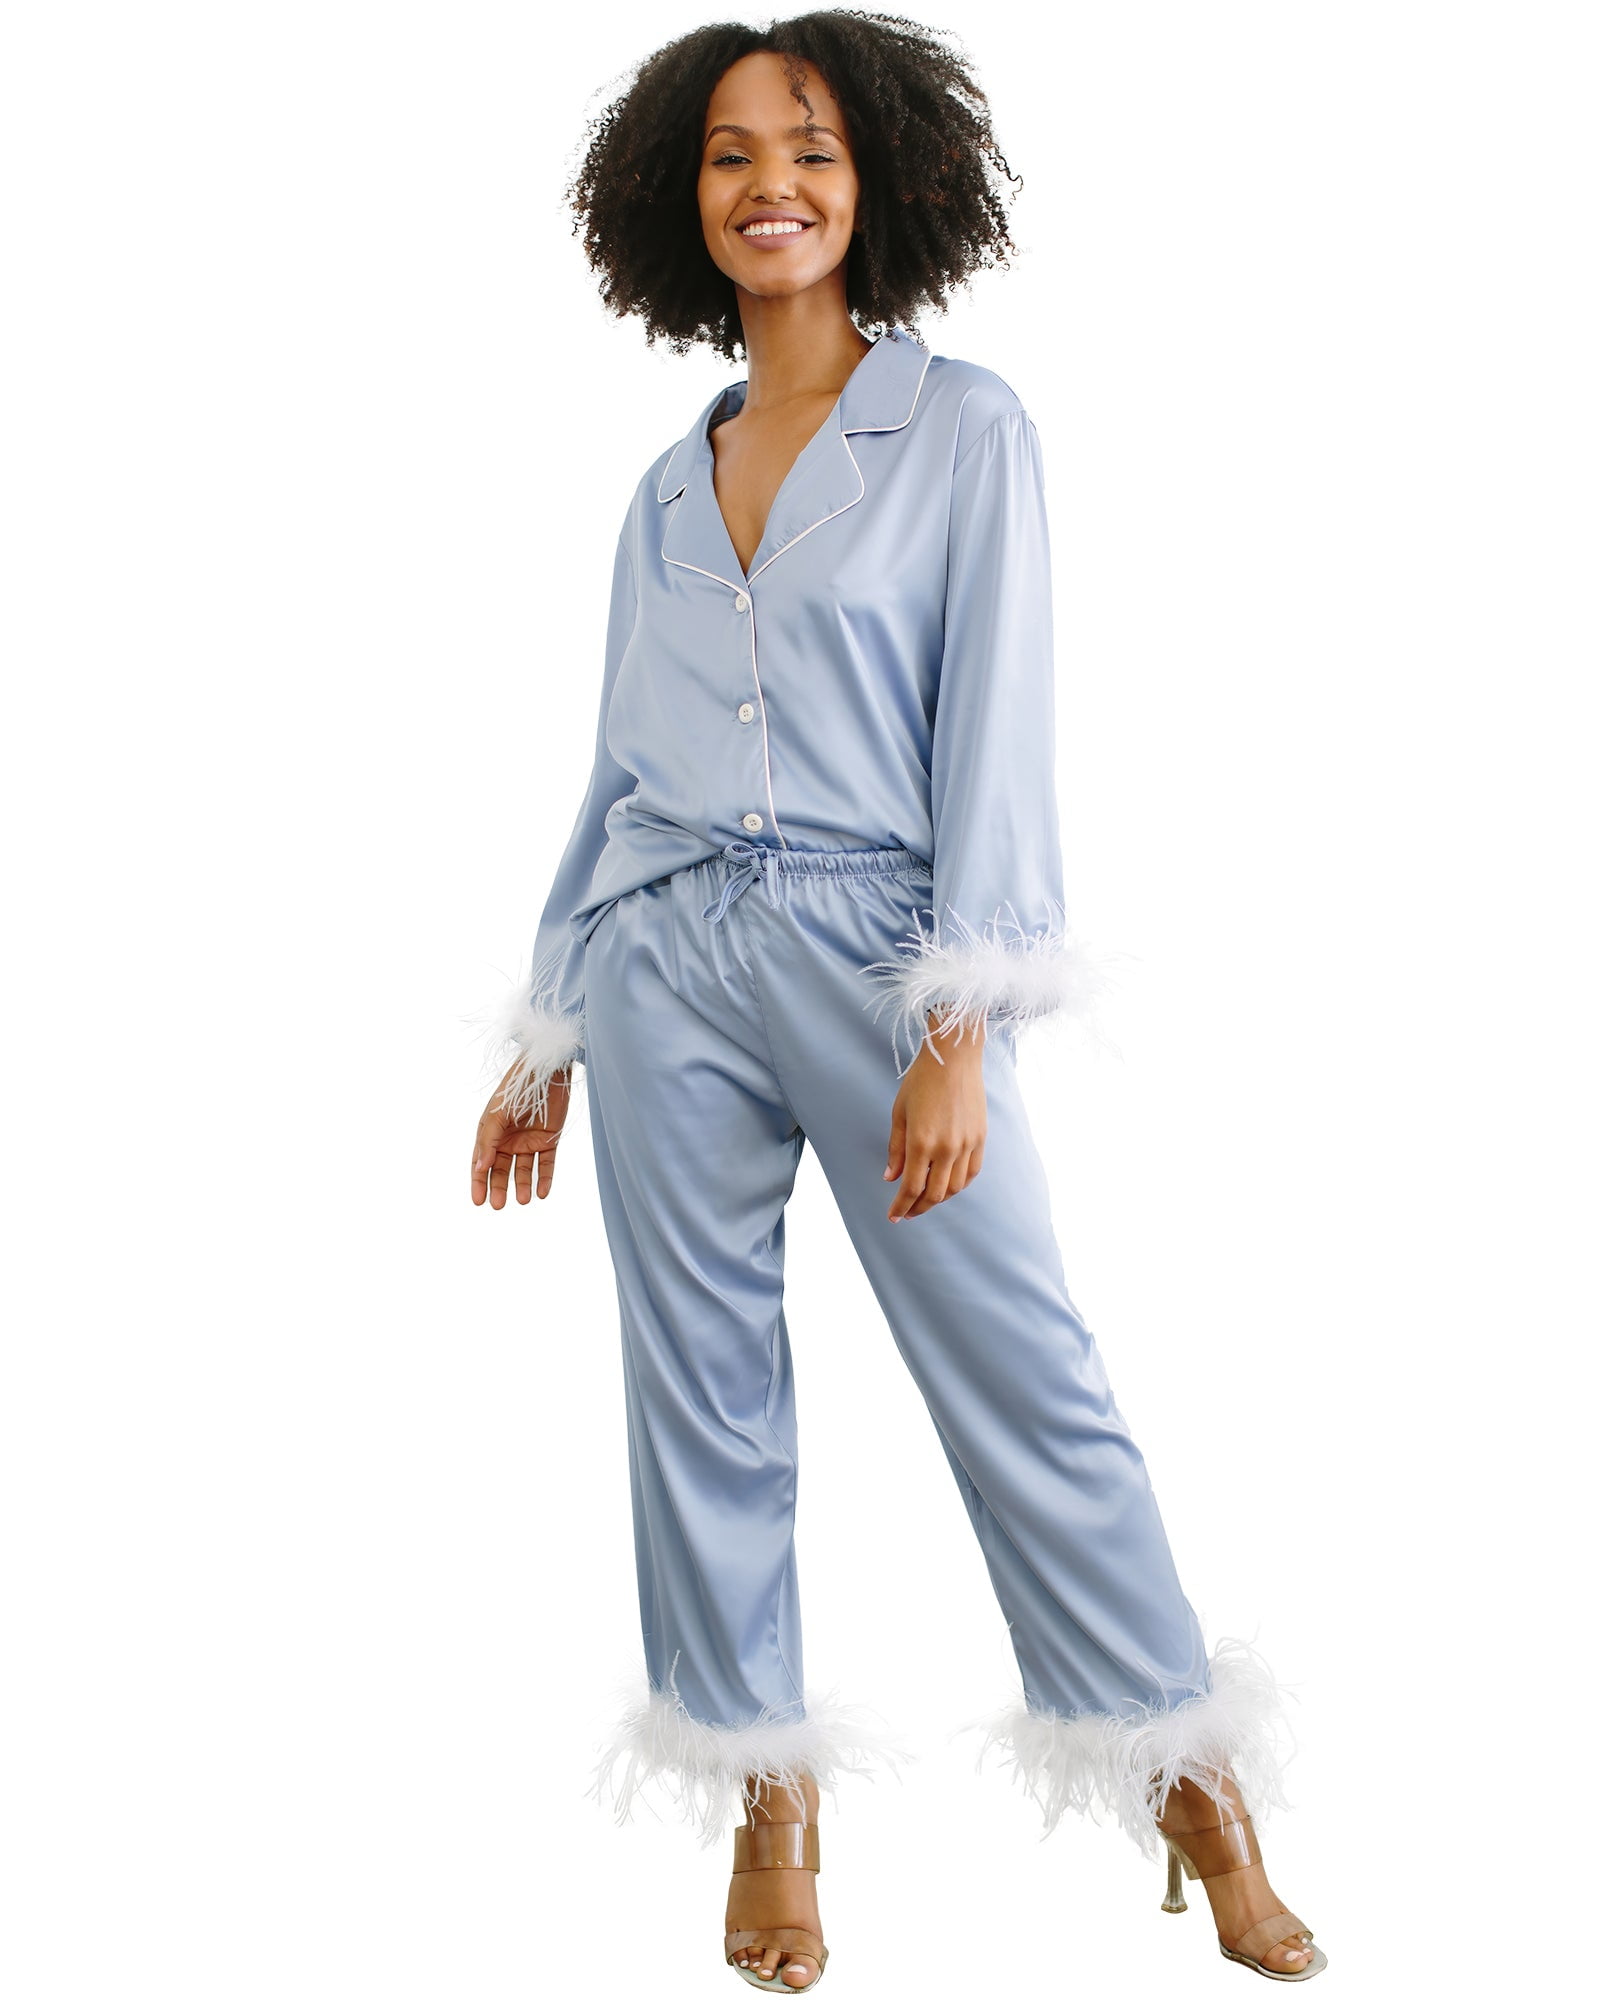 Hotouch Womens Pajama Set Lace Trim V-Neck Tank Top & Capri Pants Sleepwear Pjs Sets 